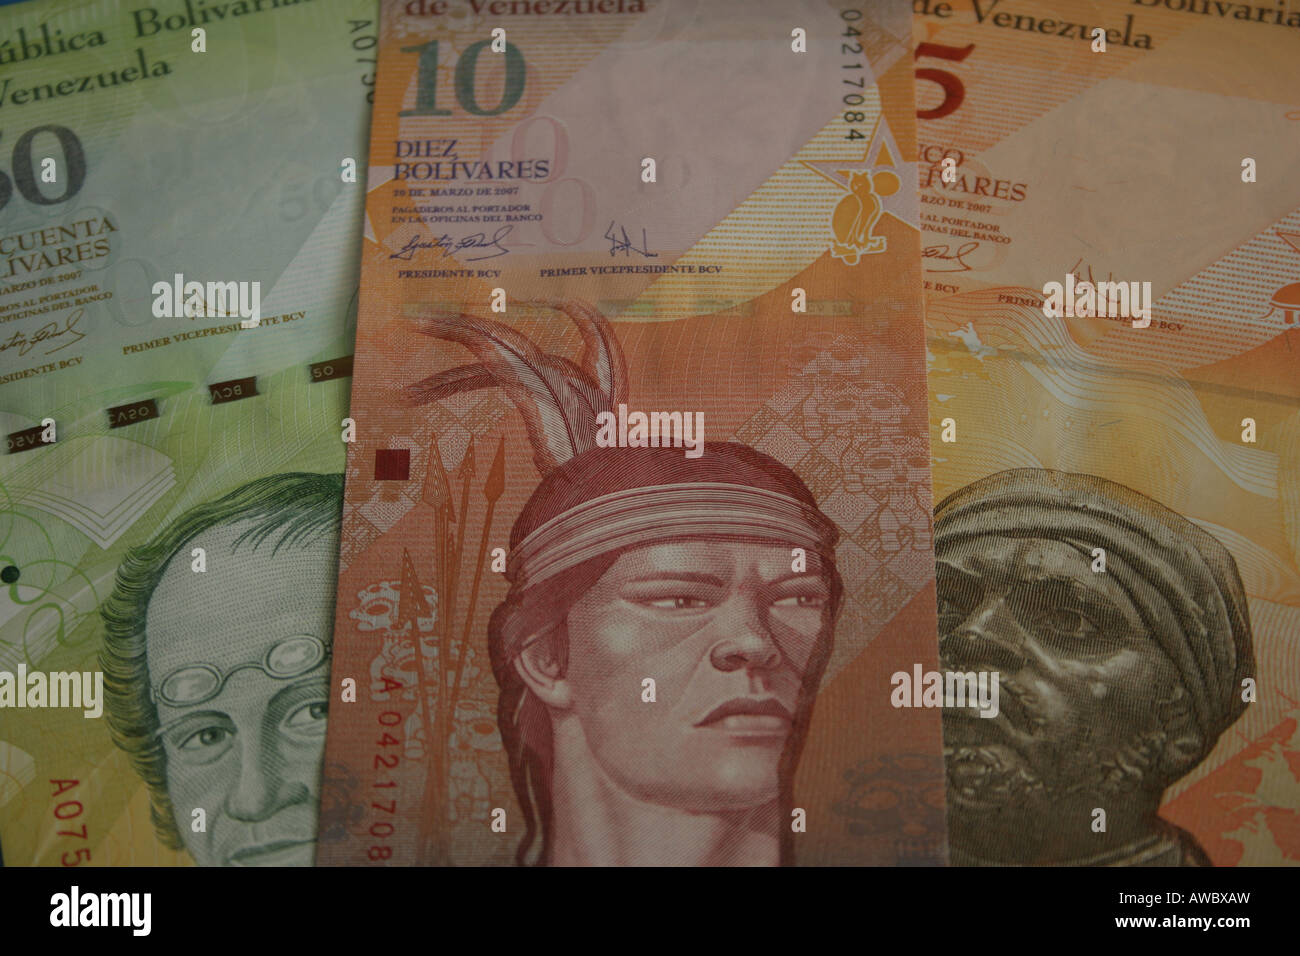 Venezuelan currency bills of 5, 50 and 10 Bolivars Stock Photo